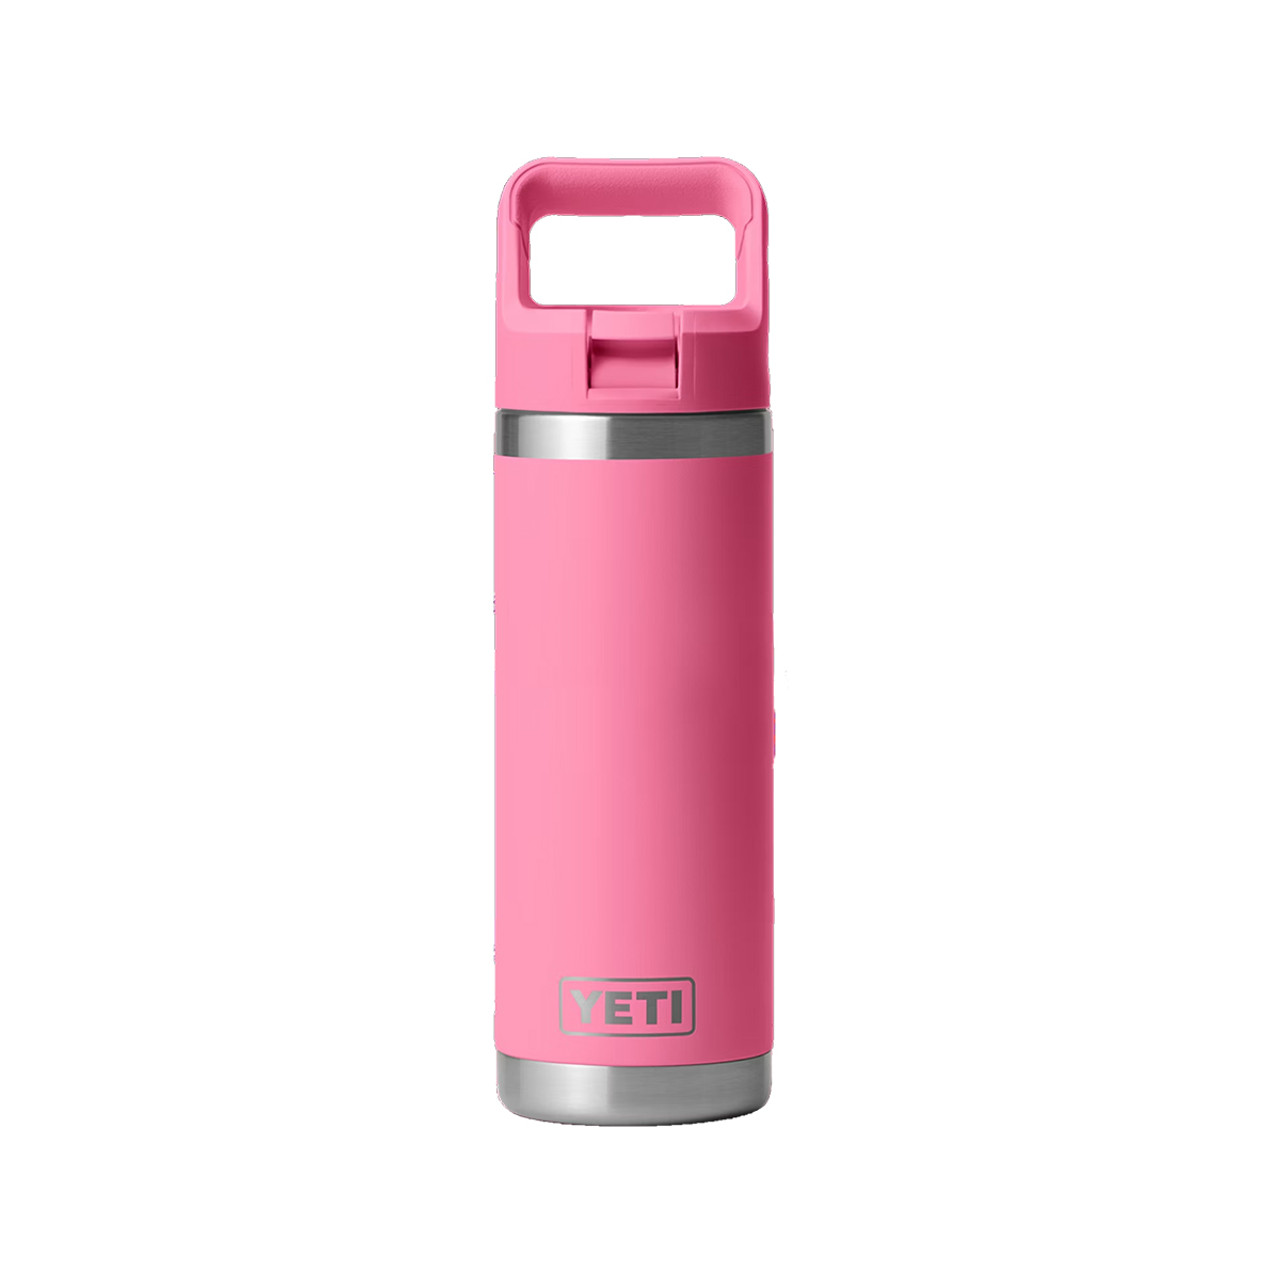 Yeti Yonder 1.5 L / 50 oz Water Bottle - Power Pink